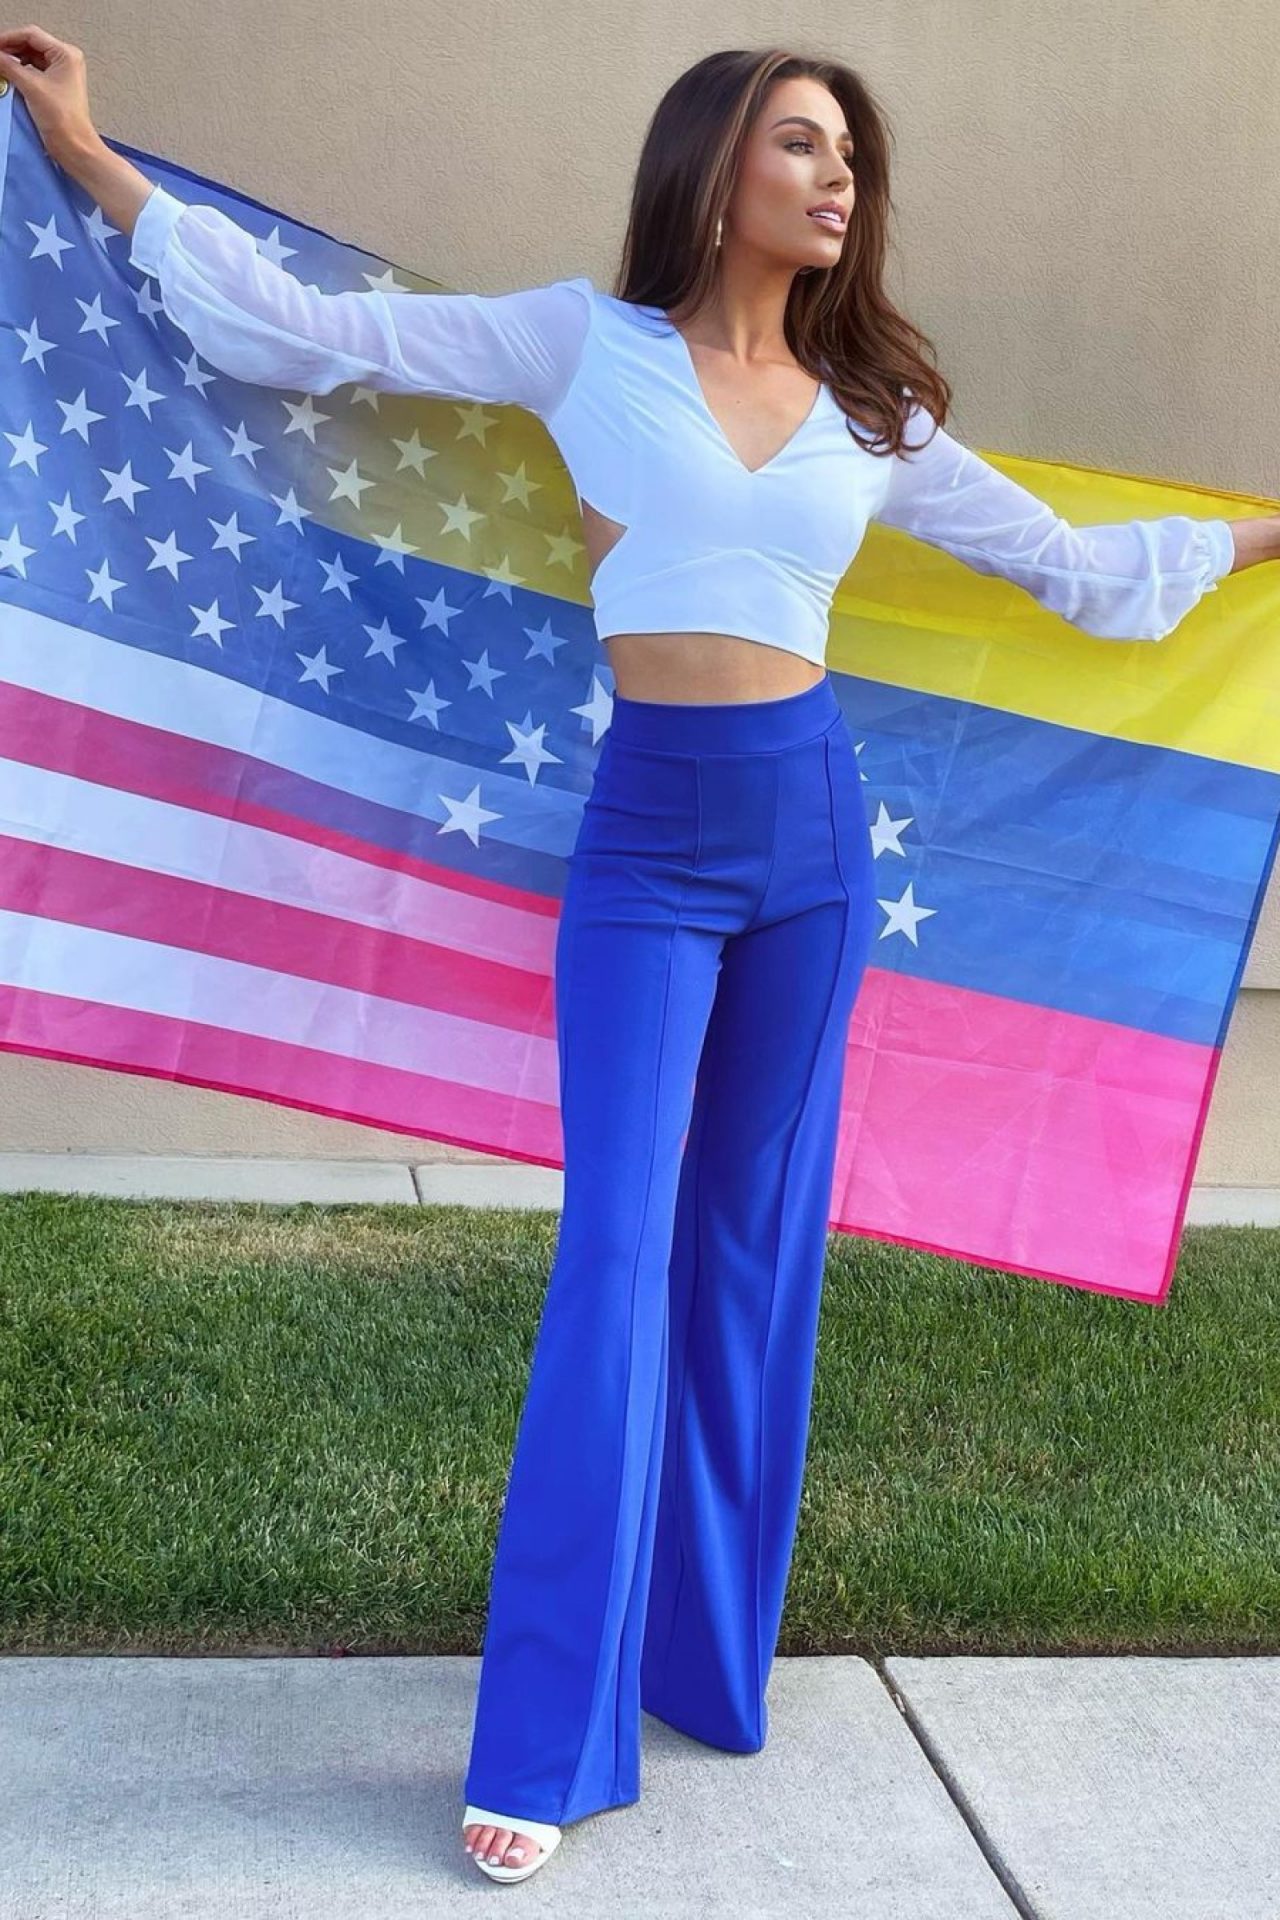 Una latina representando a Miss USA